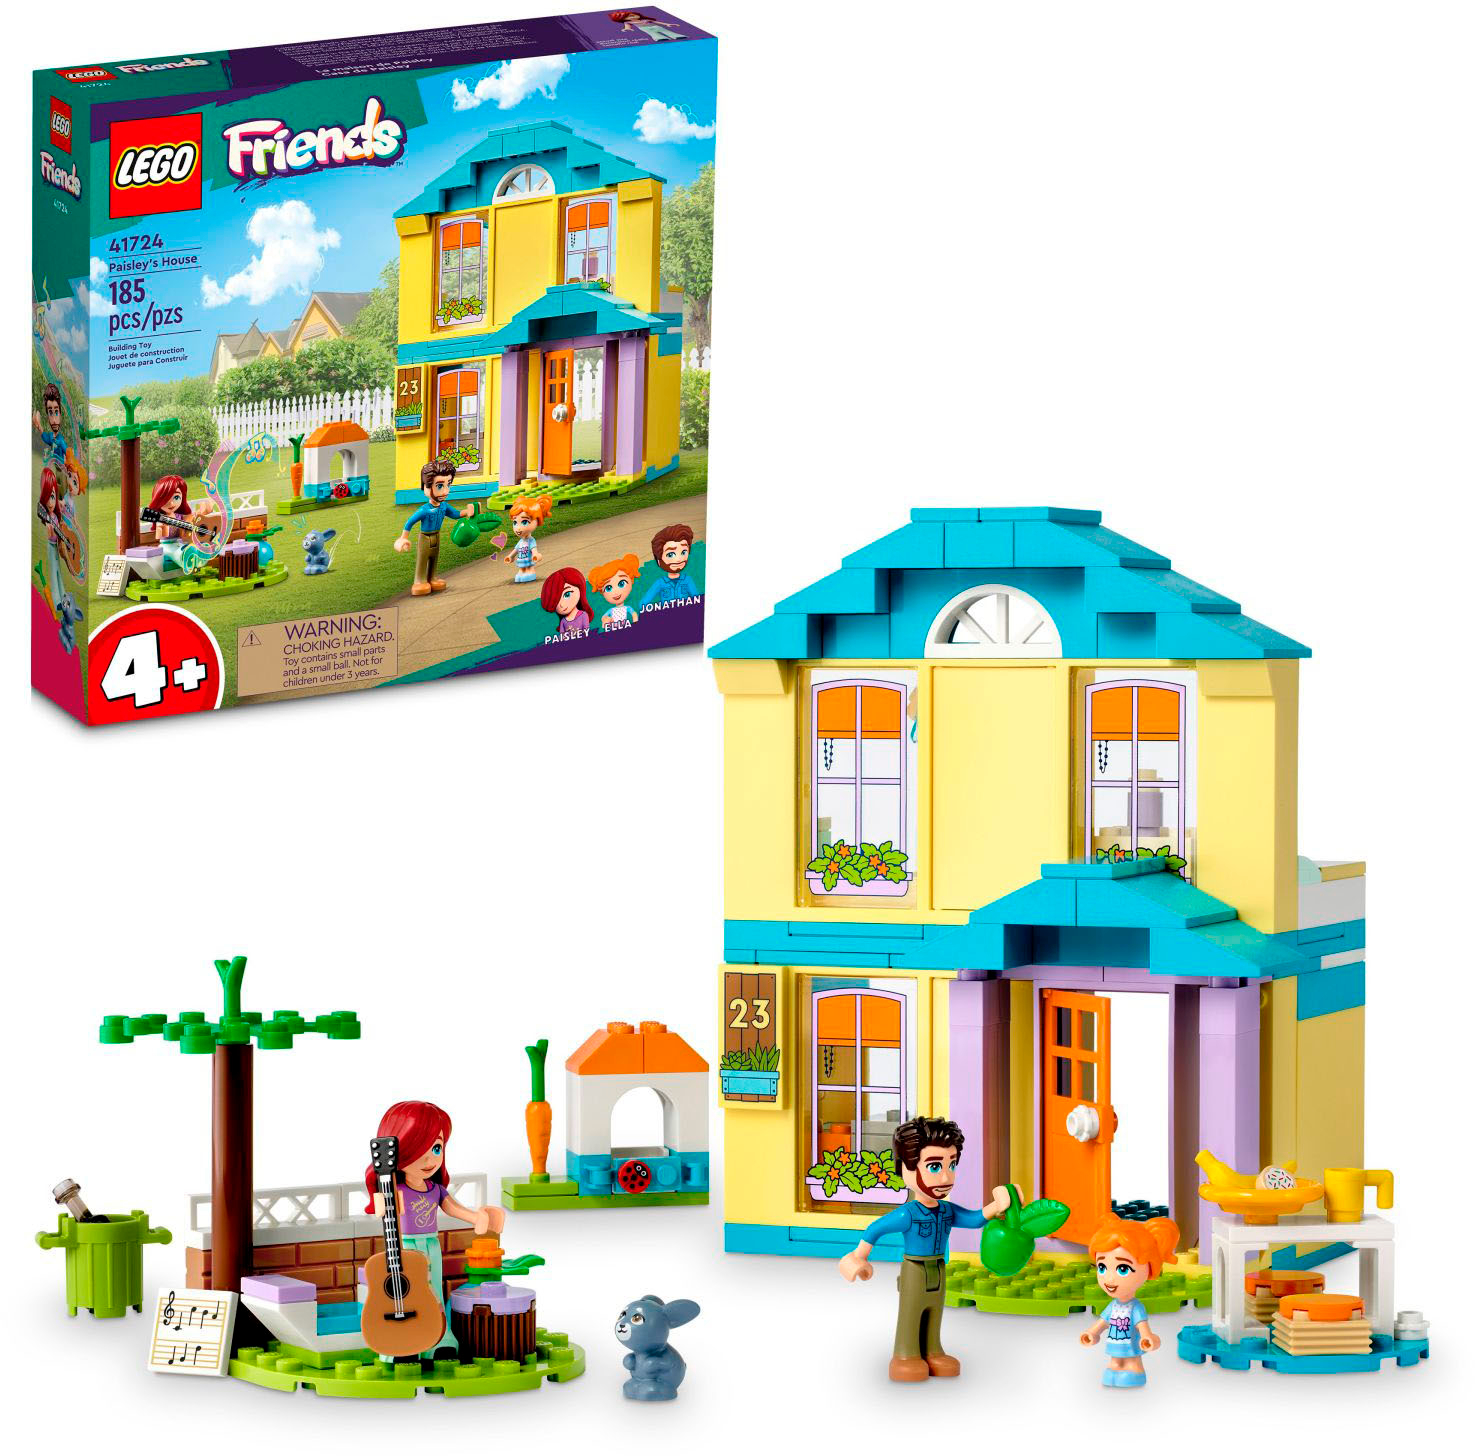 LEGO Friends Paisley's House 6425554 Best Buy